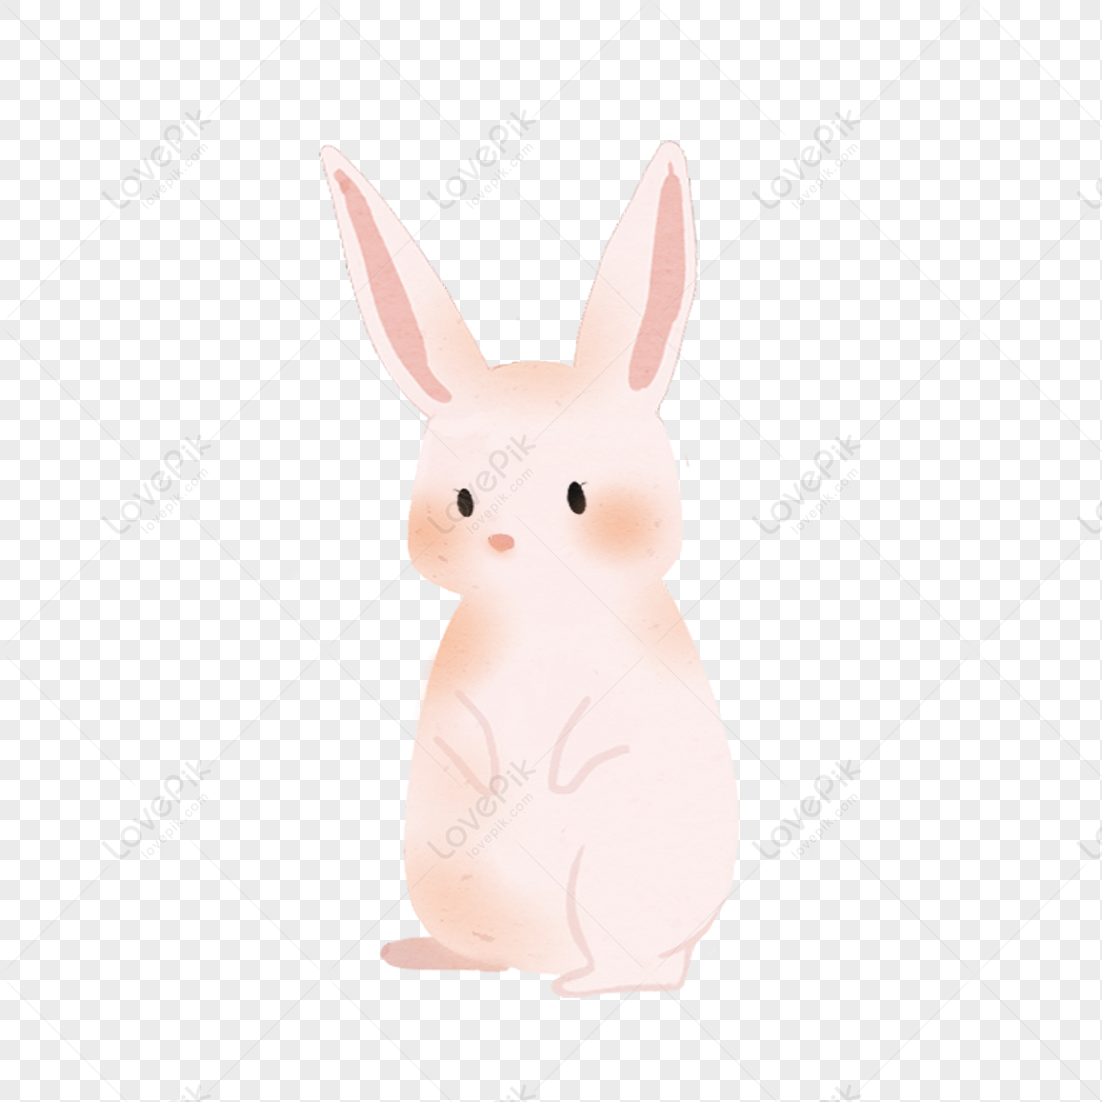 Animal Rabbit Element, Cute Rabbit, Pink Rabbit, Rabbit Vector PNG Free ...